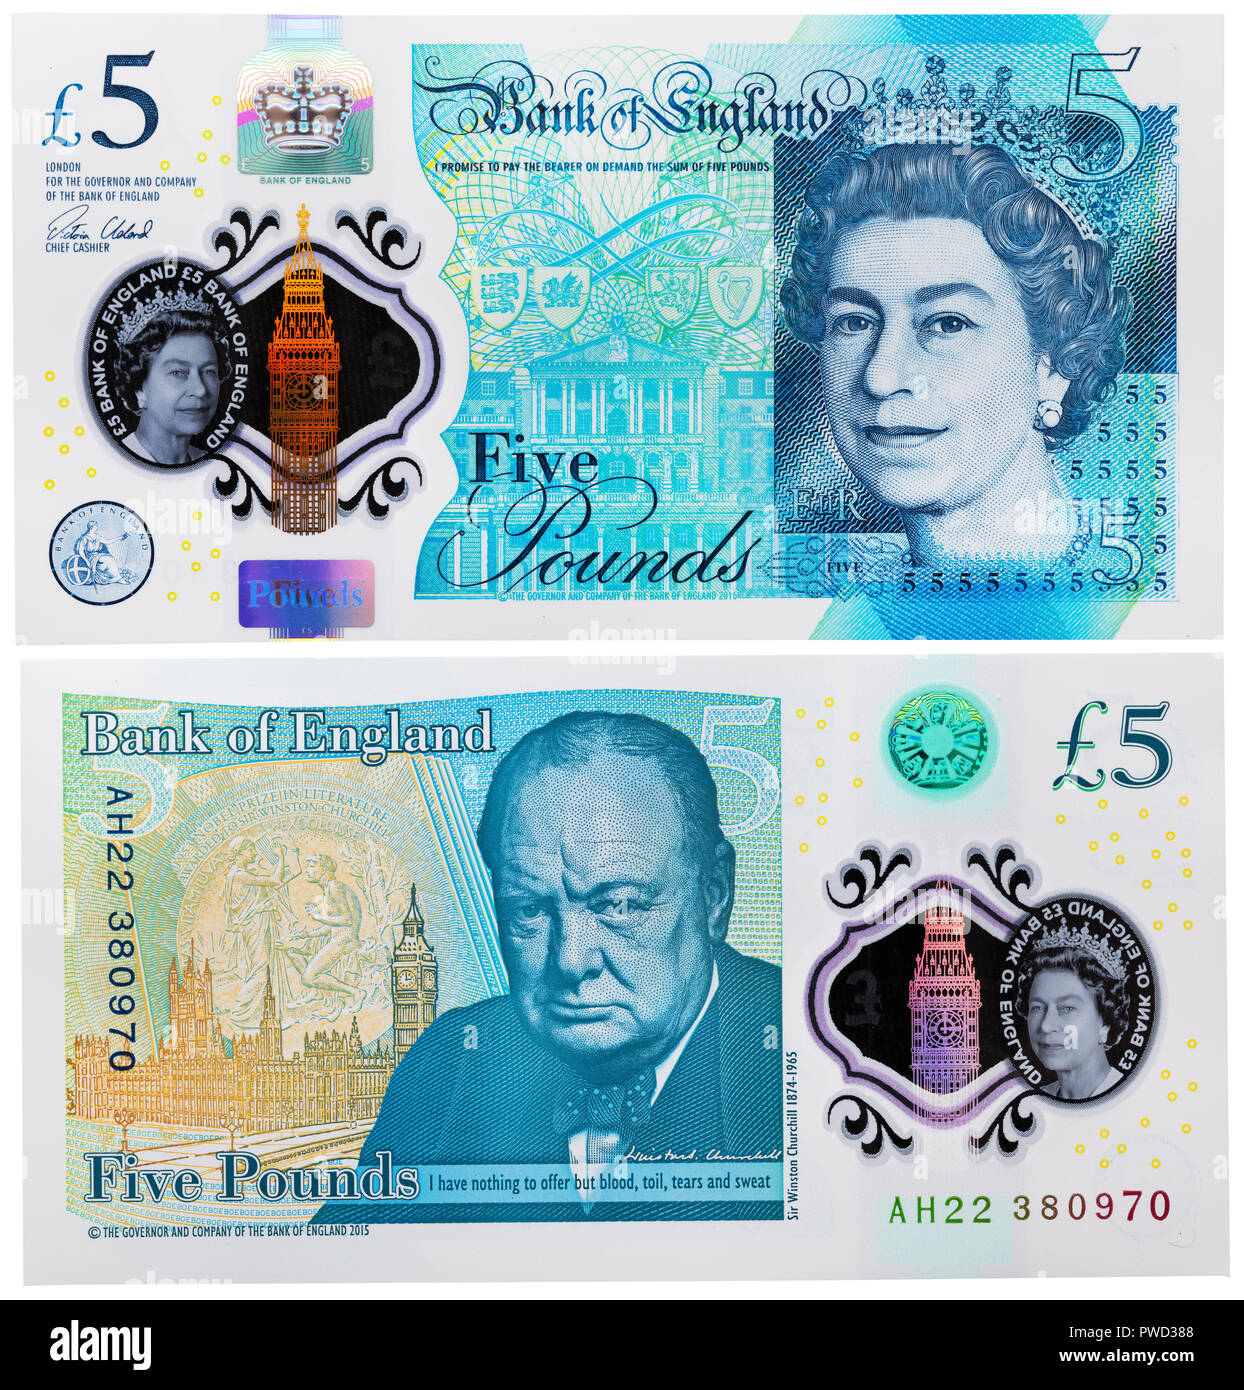 https://c8.alamy.com/comp/PWD388/5-pounds-banknote-queen-elizabeth-ii-winston-churchill-uk-2015-PWD388.jpg